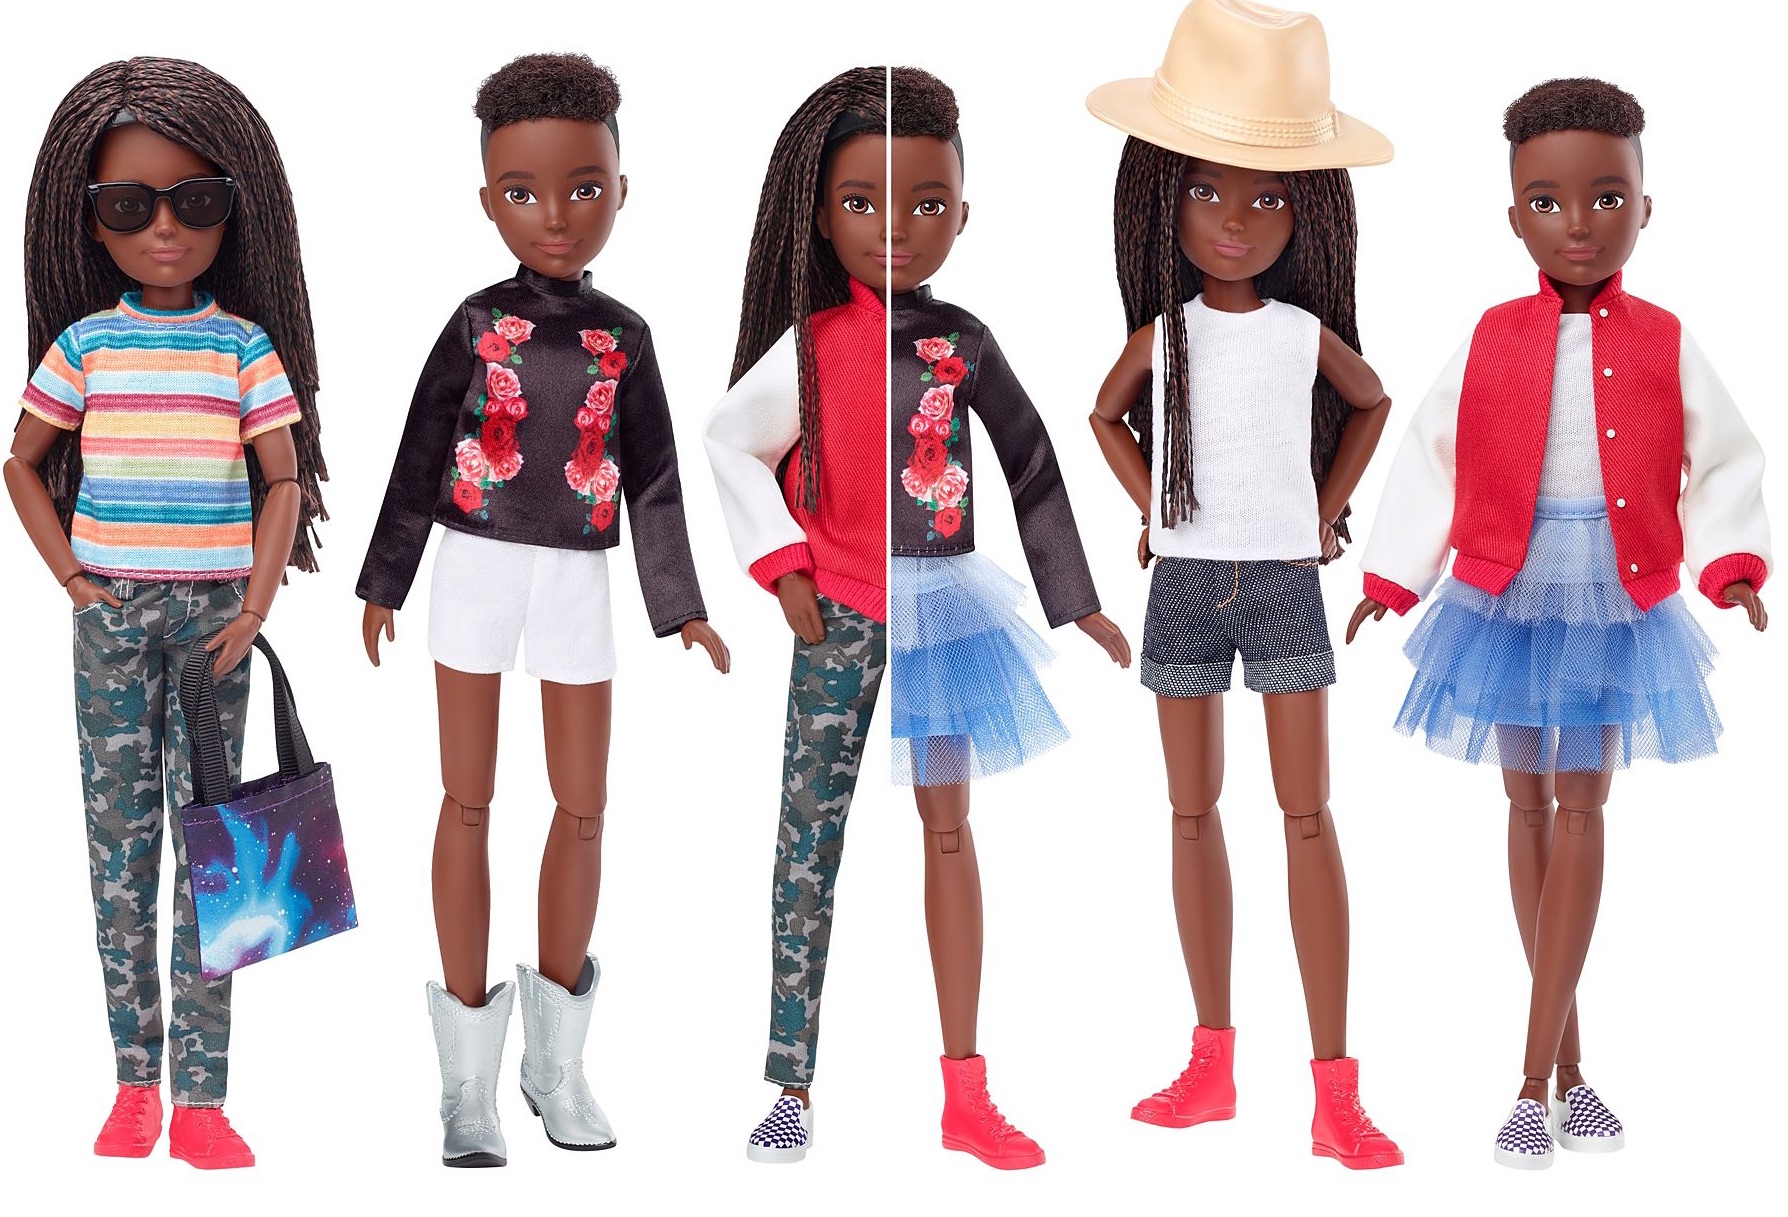 Mattel, Maker of Barbie, Launches Line Of Gender-Inclusive Dolls